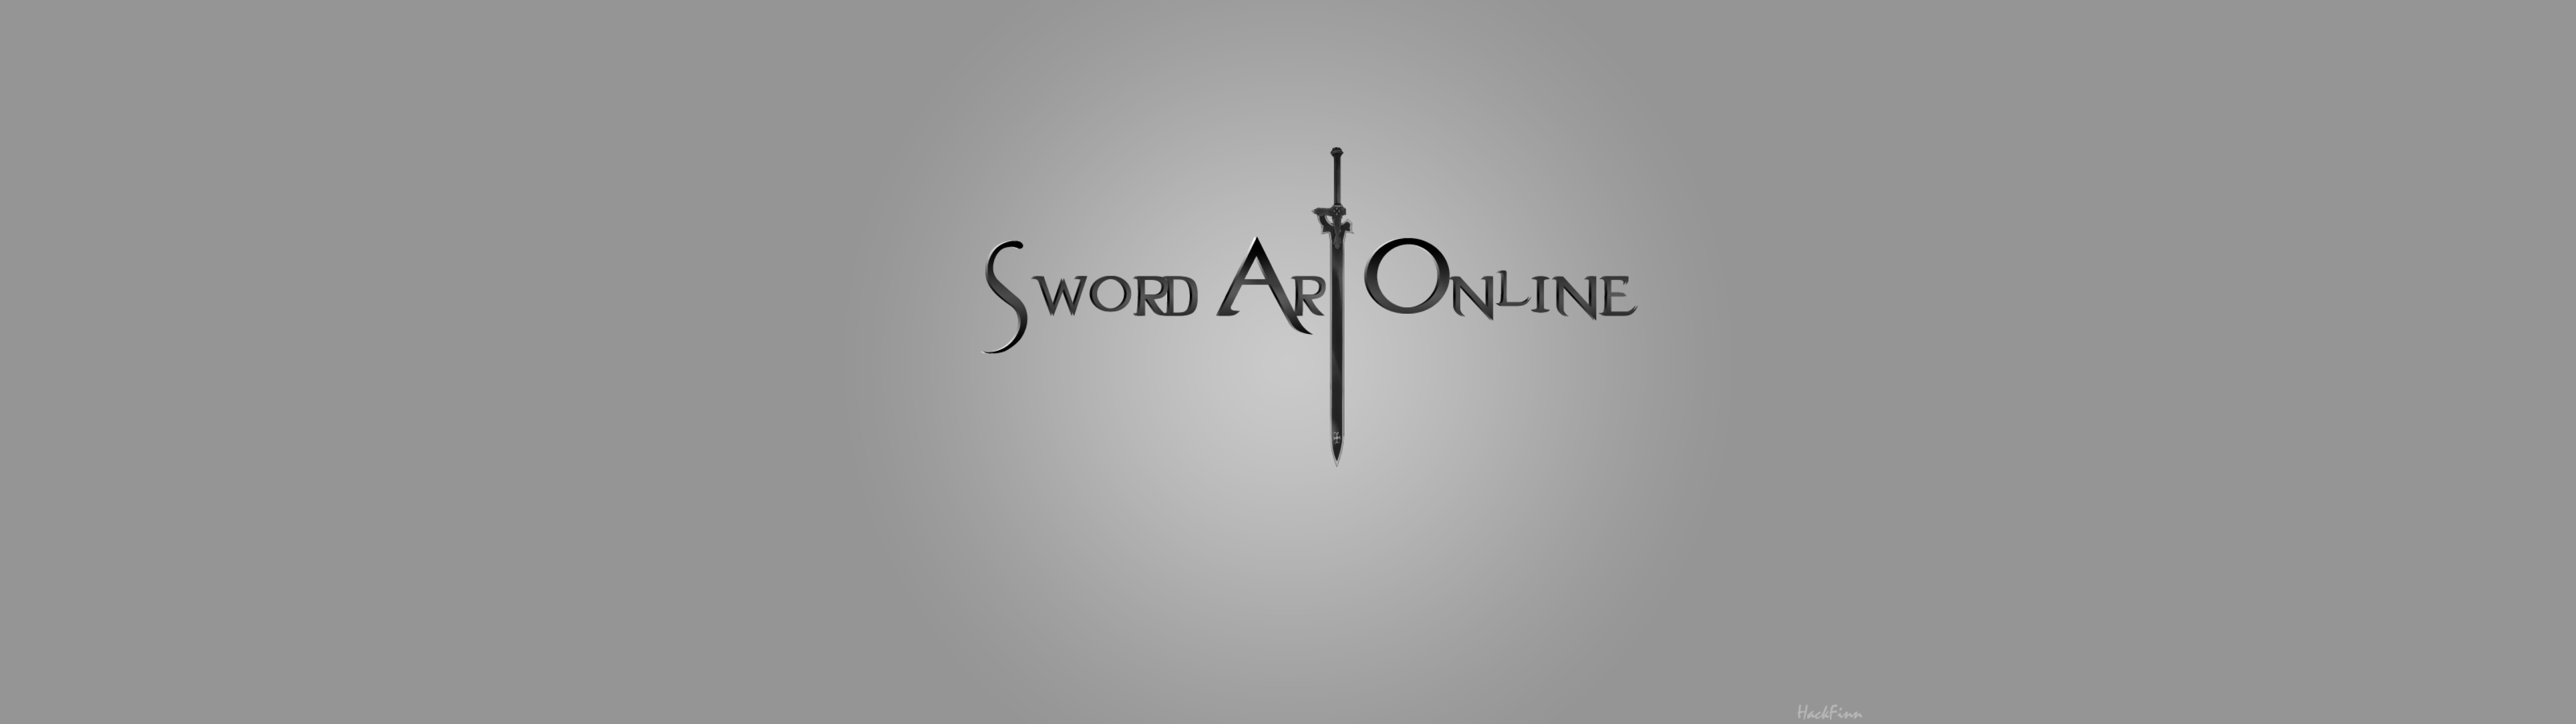 Anime 5120x1440 Sword Art Online anime sword minimalism simple background